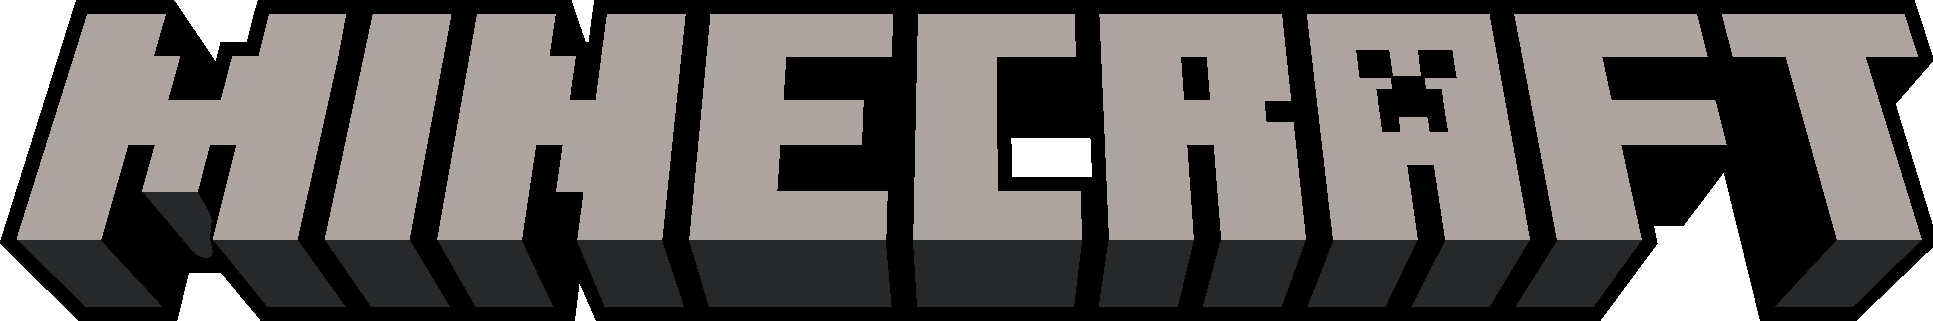 the legend of zelda minecraft logo